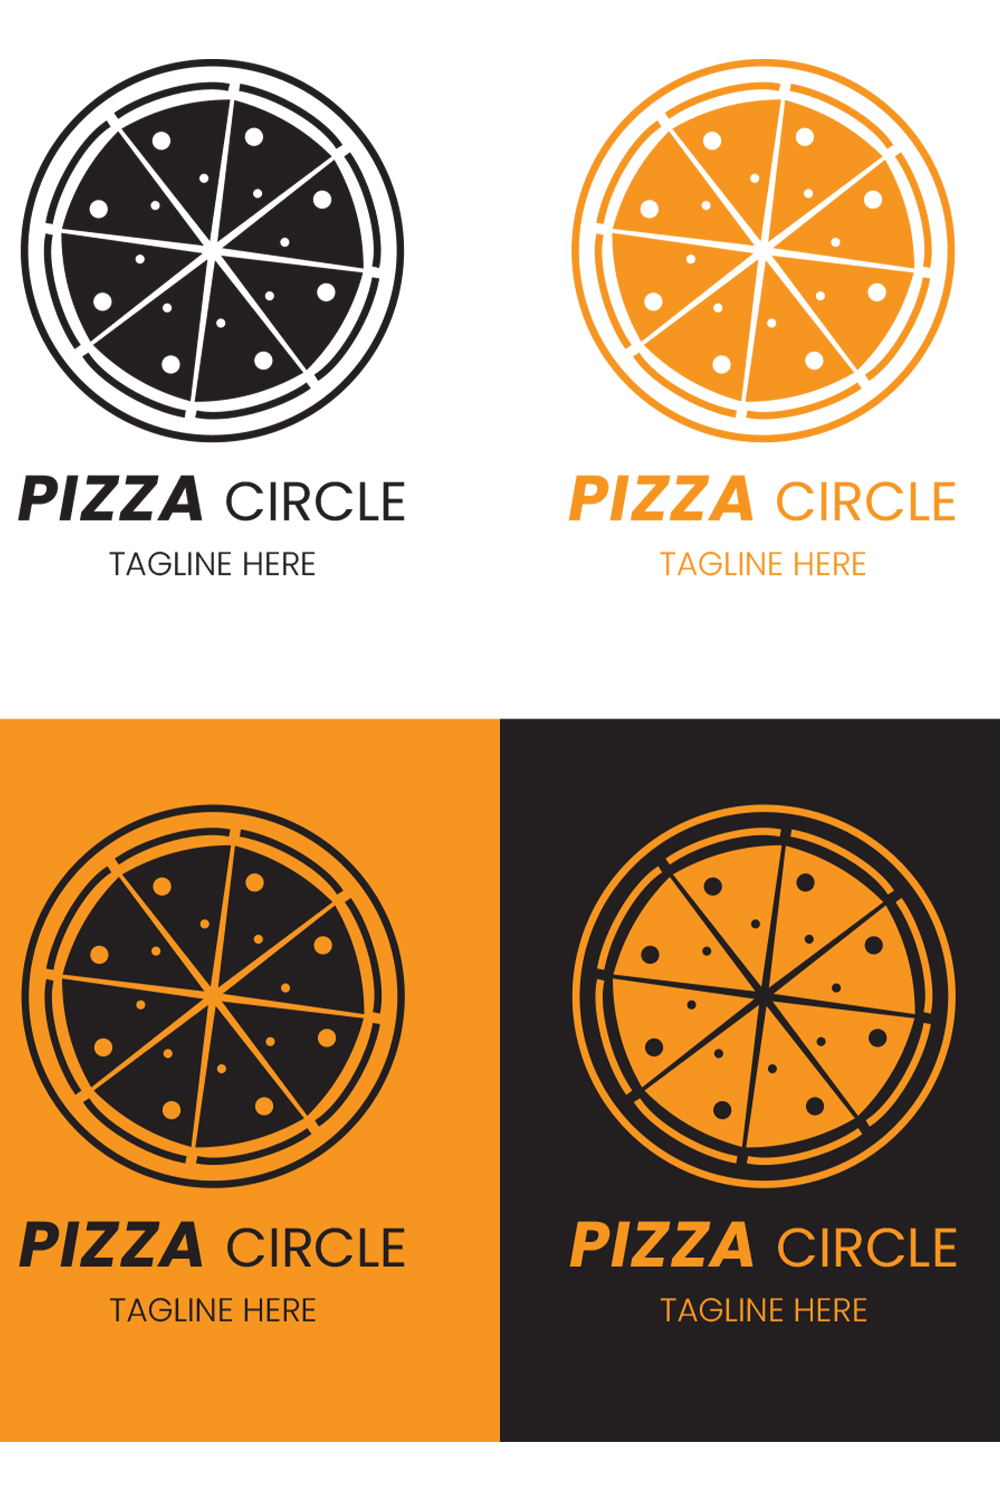 pizza circle logo pinterest preview image.